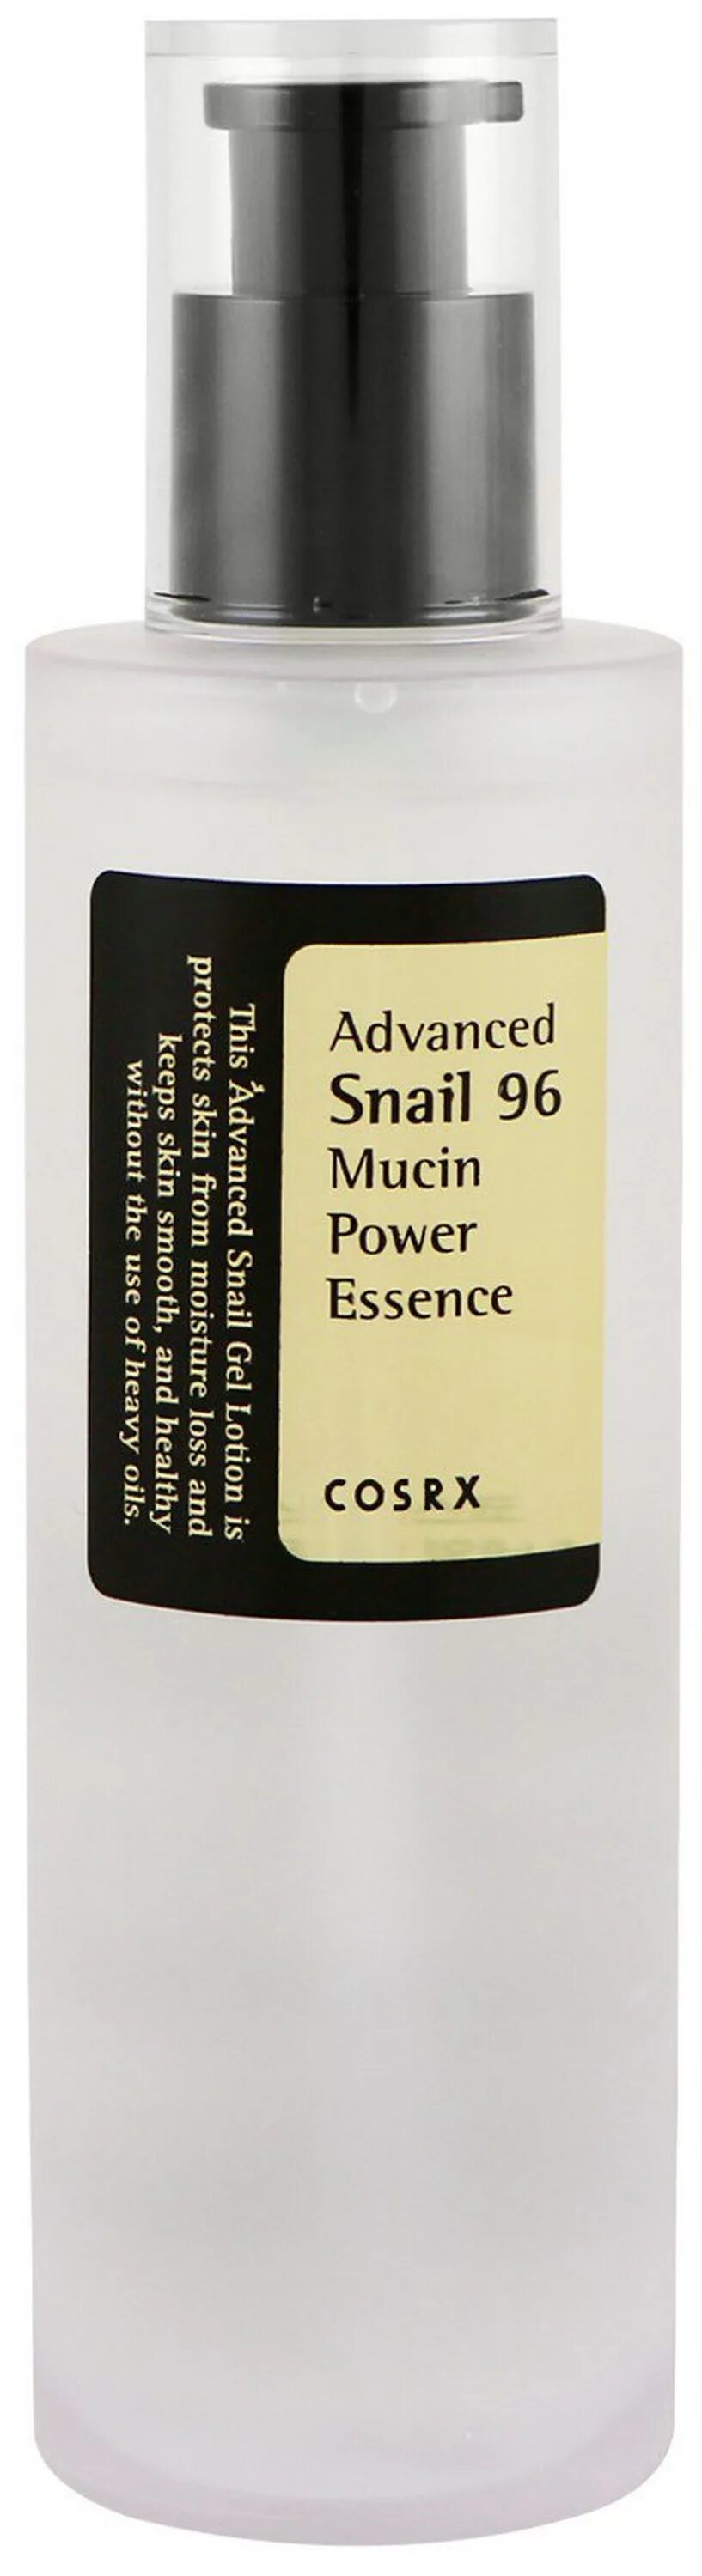 Advanced Snail 96 Mucin Power Essence 100ml. Advanced Snail 96 Mucin Power Liquid. COSRX Advanced Snail 96 Mucin. COSRX Advanced Snail 96 Mucin Power Essence.